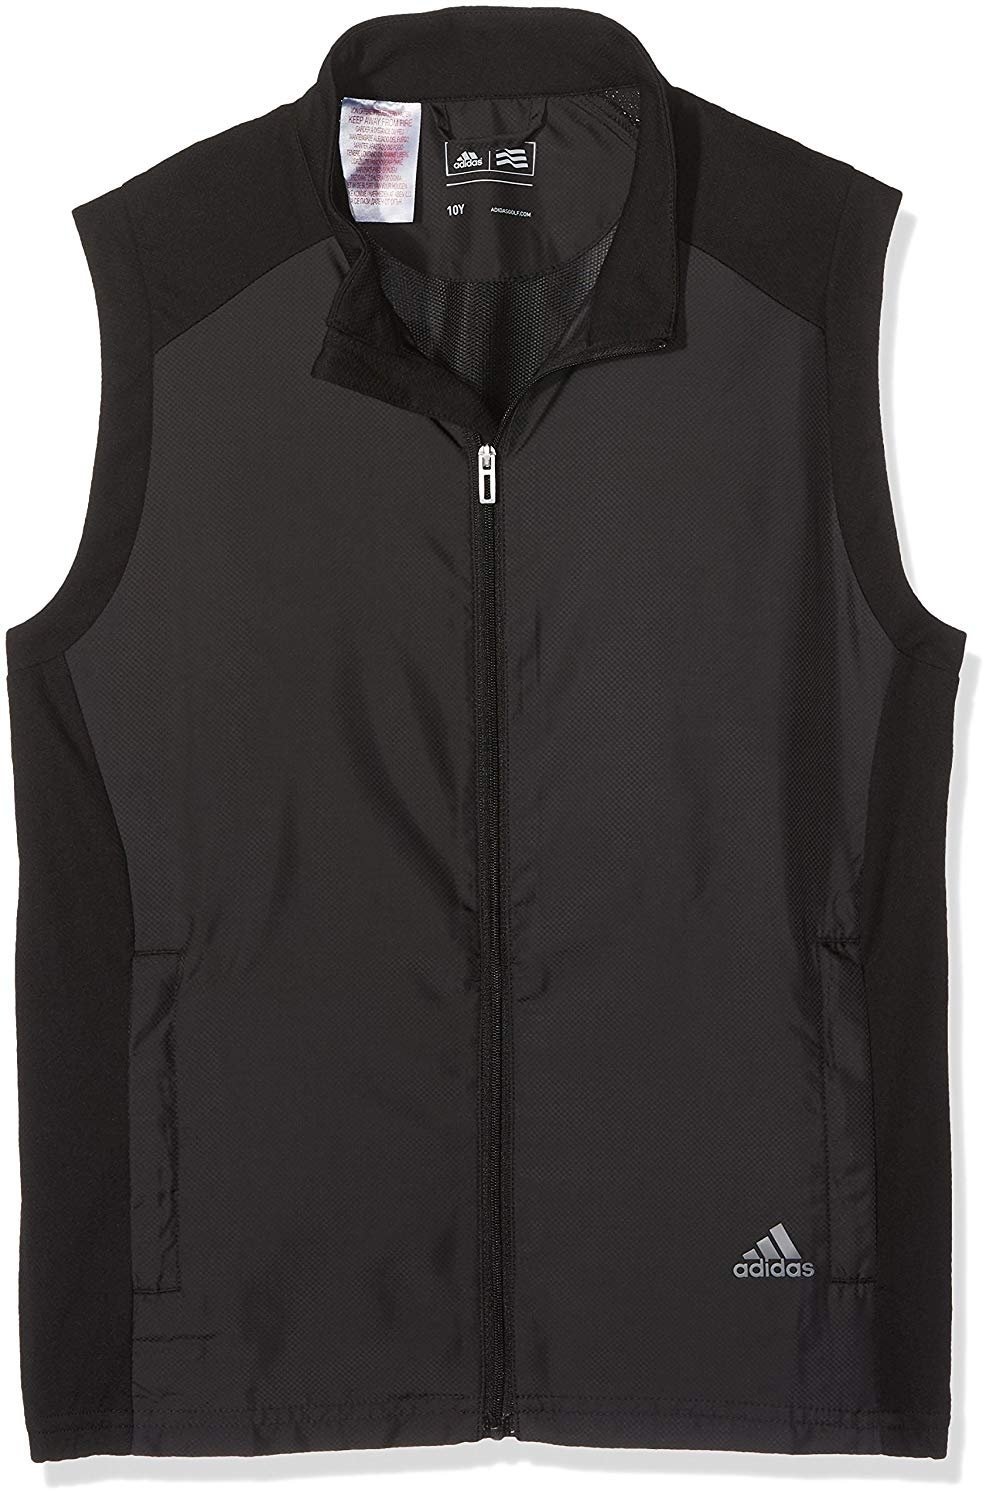 Жилетка Adidas Performance Junior Vest Black 12Y